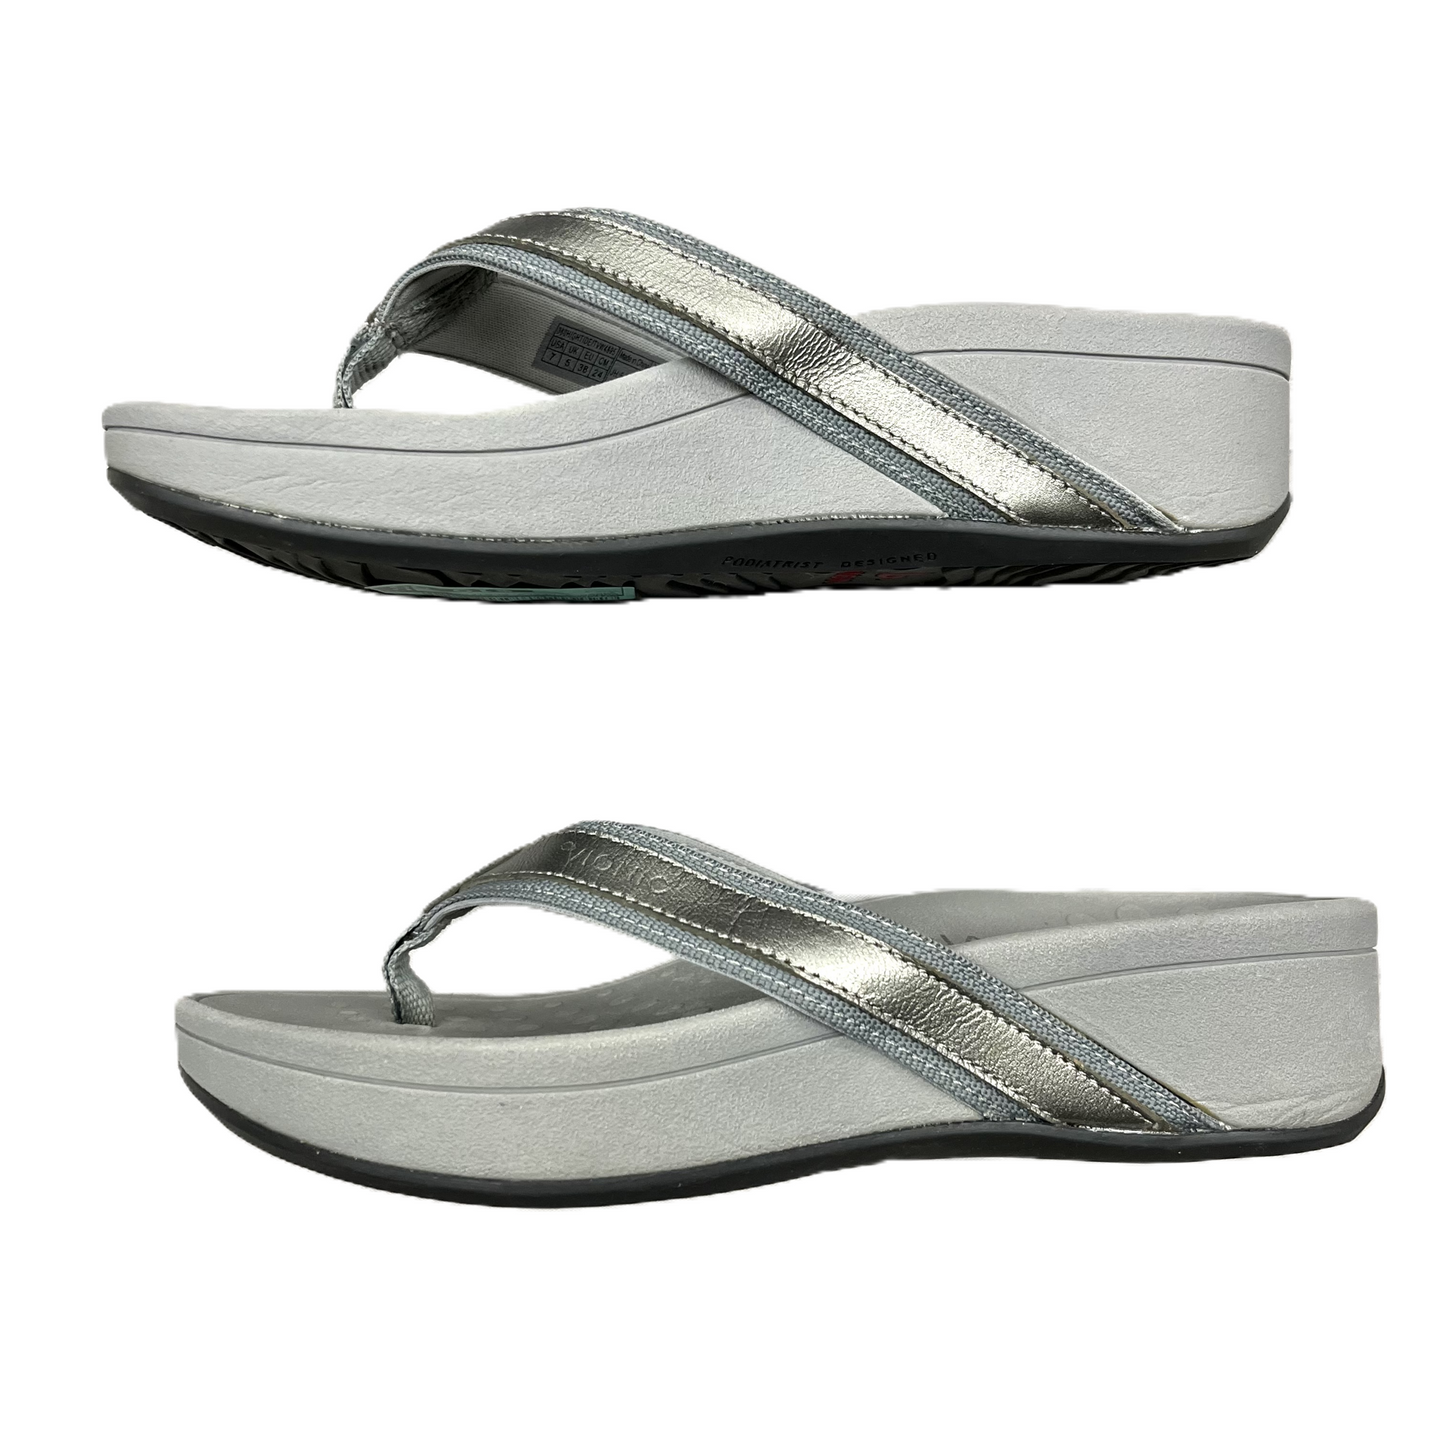 Sandals Heels Platform By Vionic  Size: 7